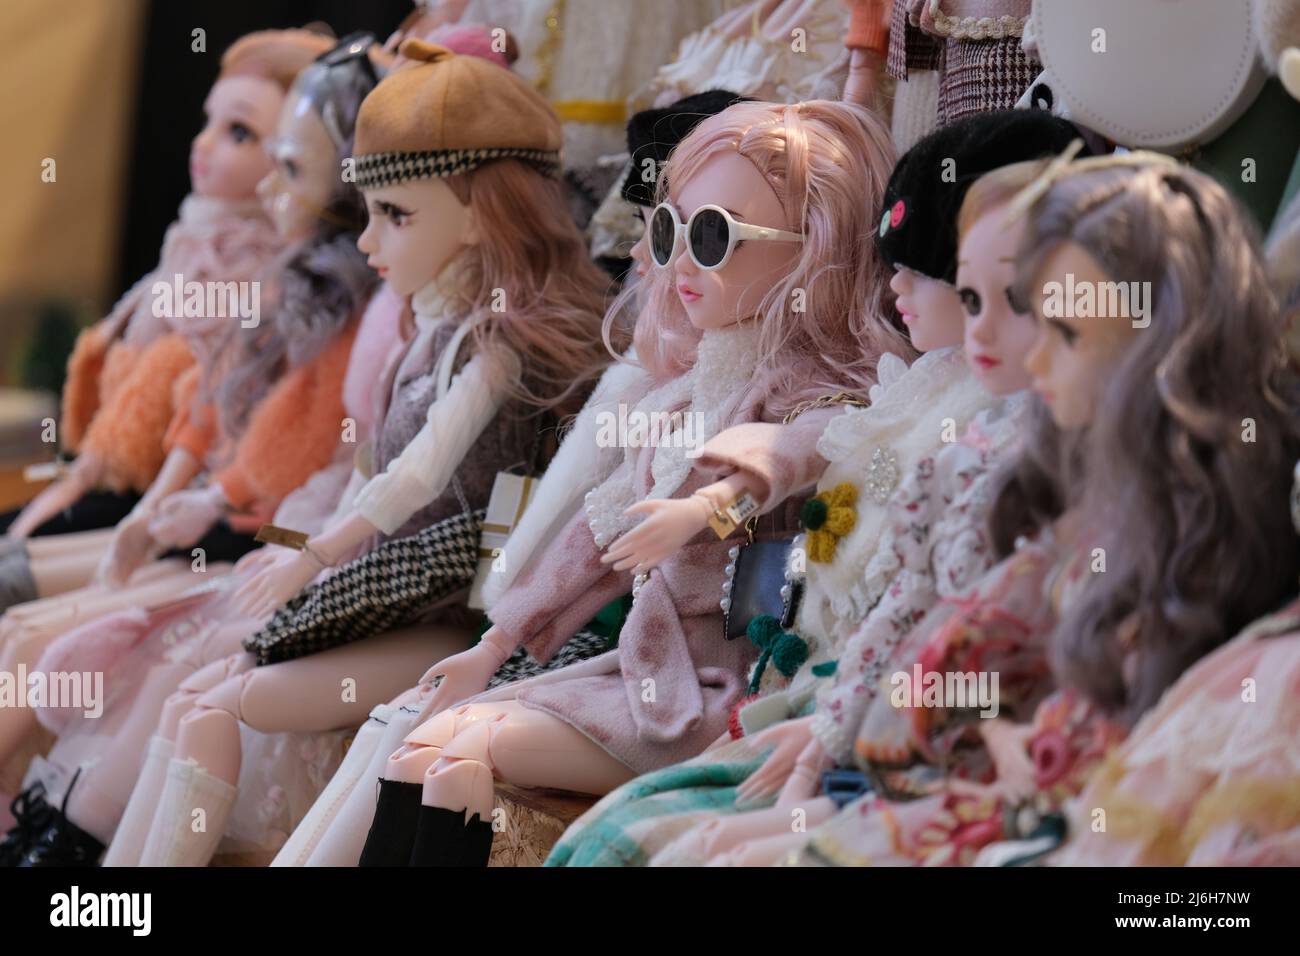 A row of lavishly dressed dolls Stock Photo